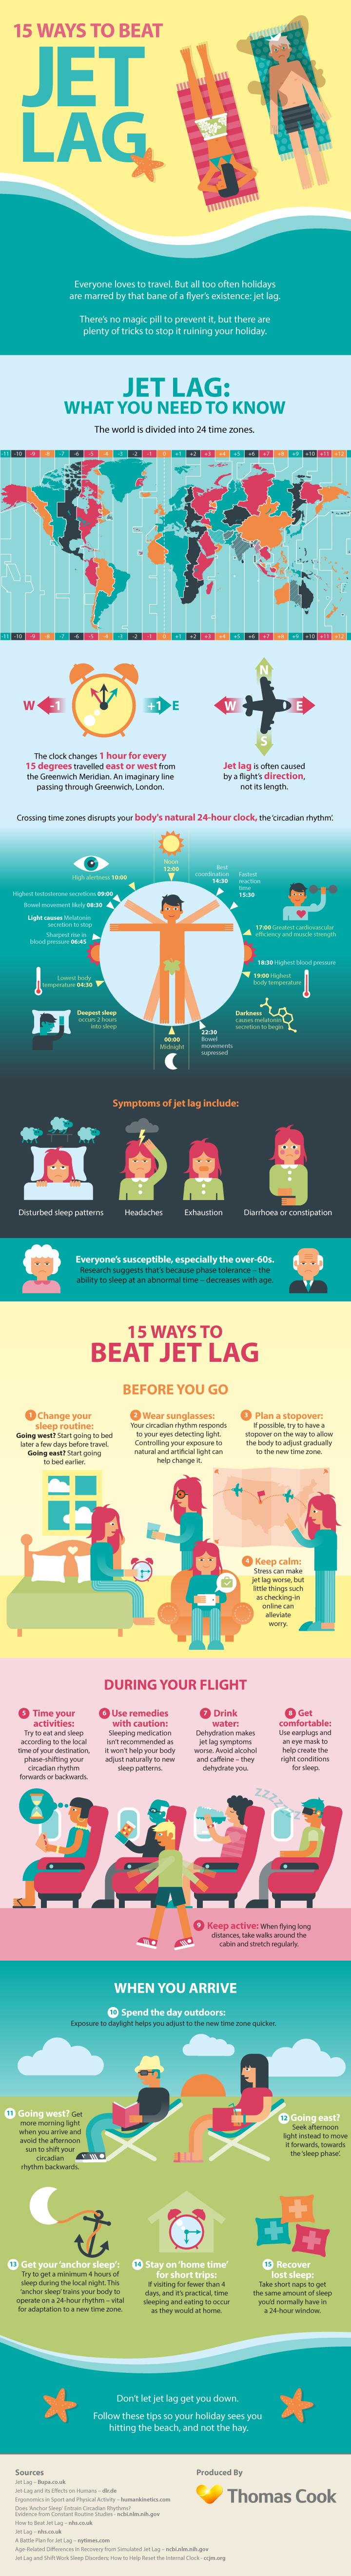 15 Ways to Beat Jet Lag infographic 